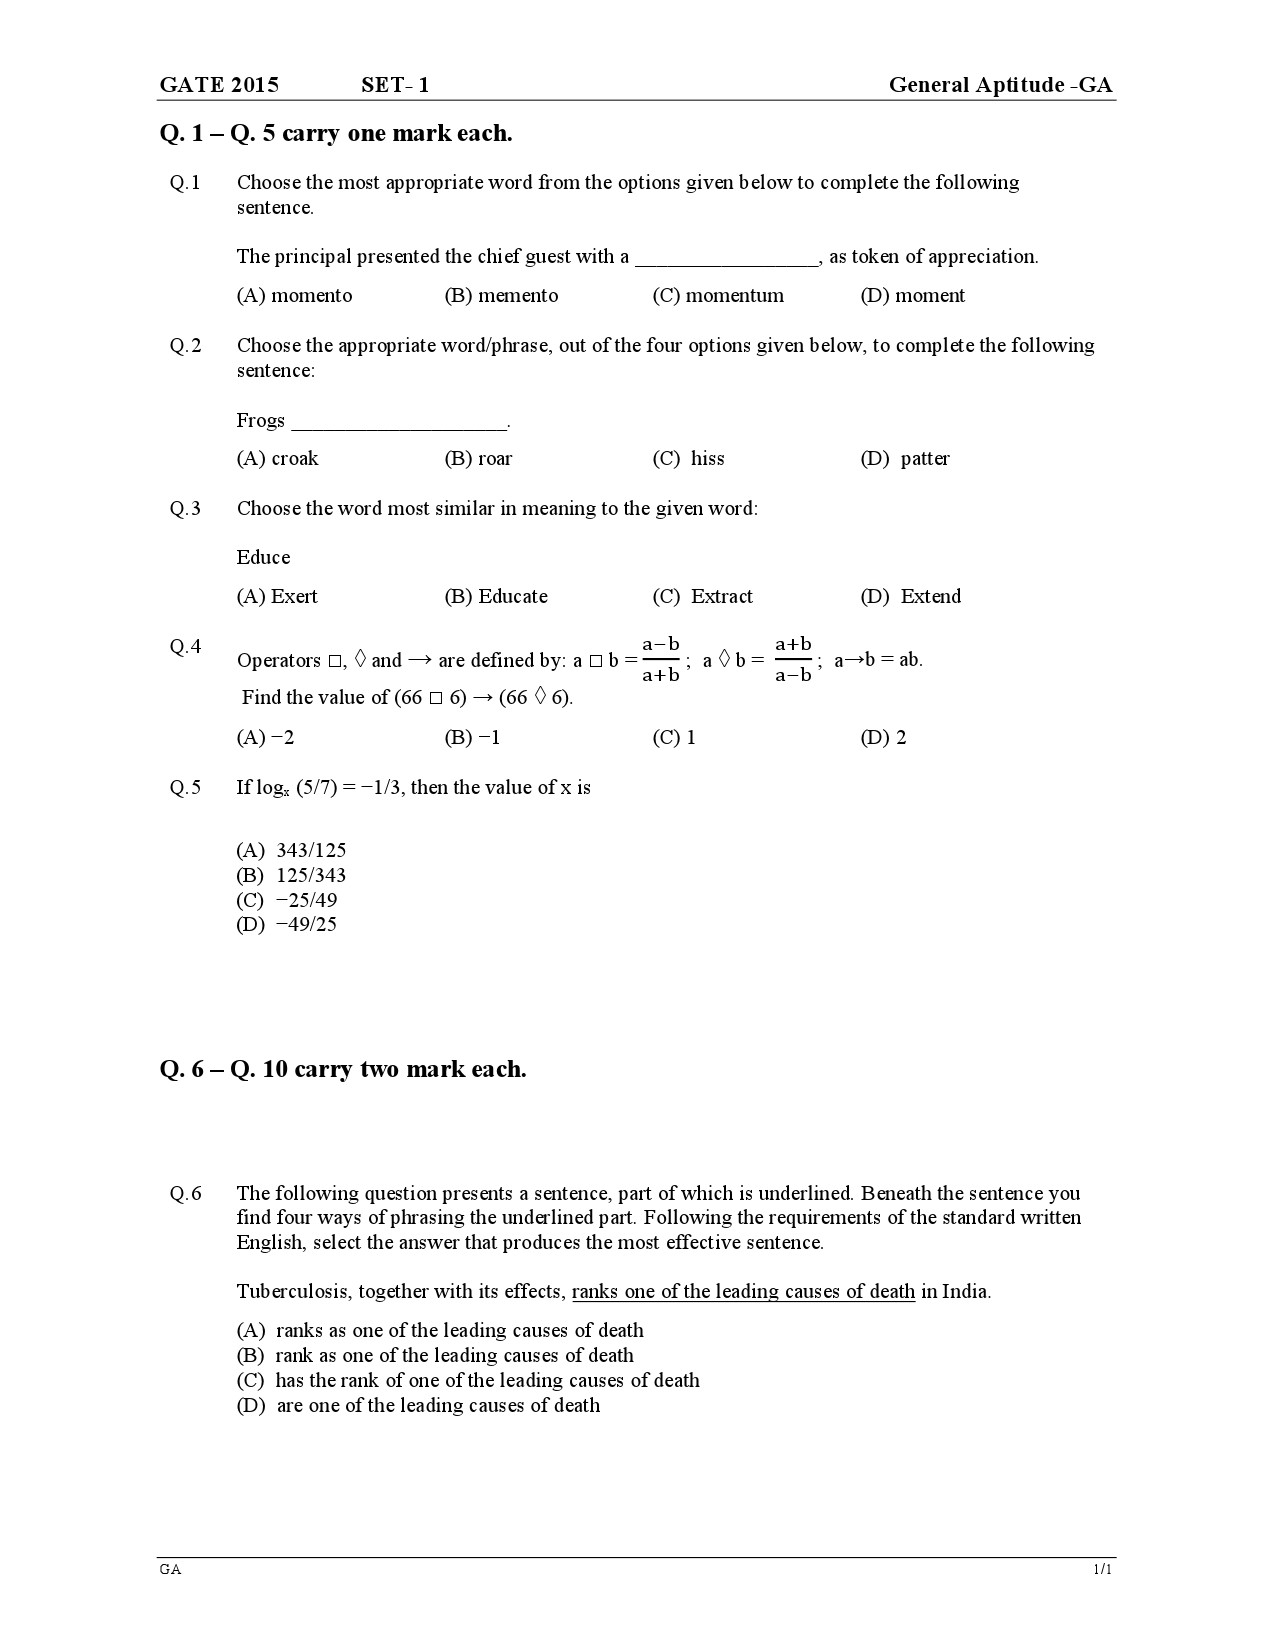 GATE Exam Question Paper 2015 General Aptitude 1